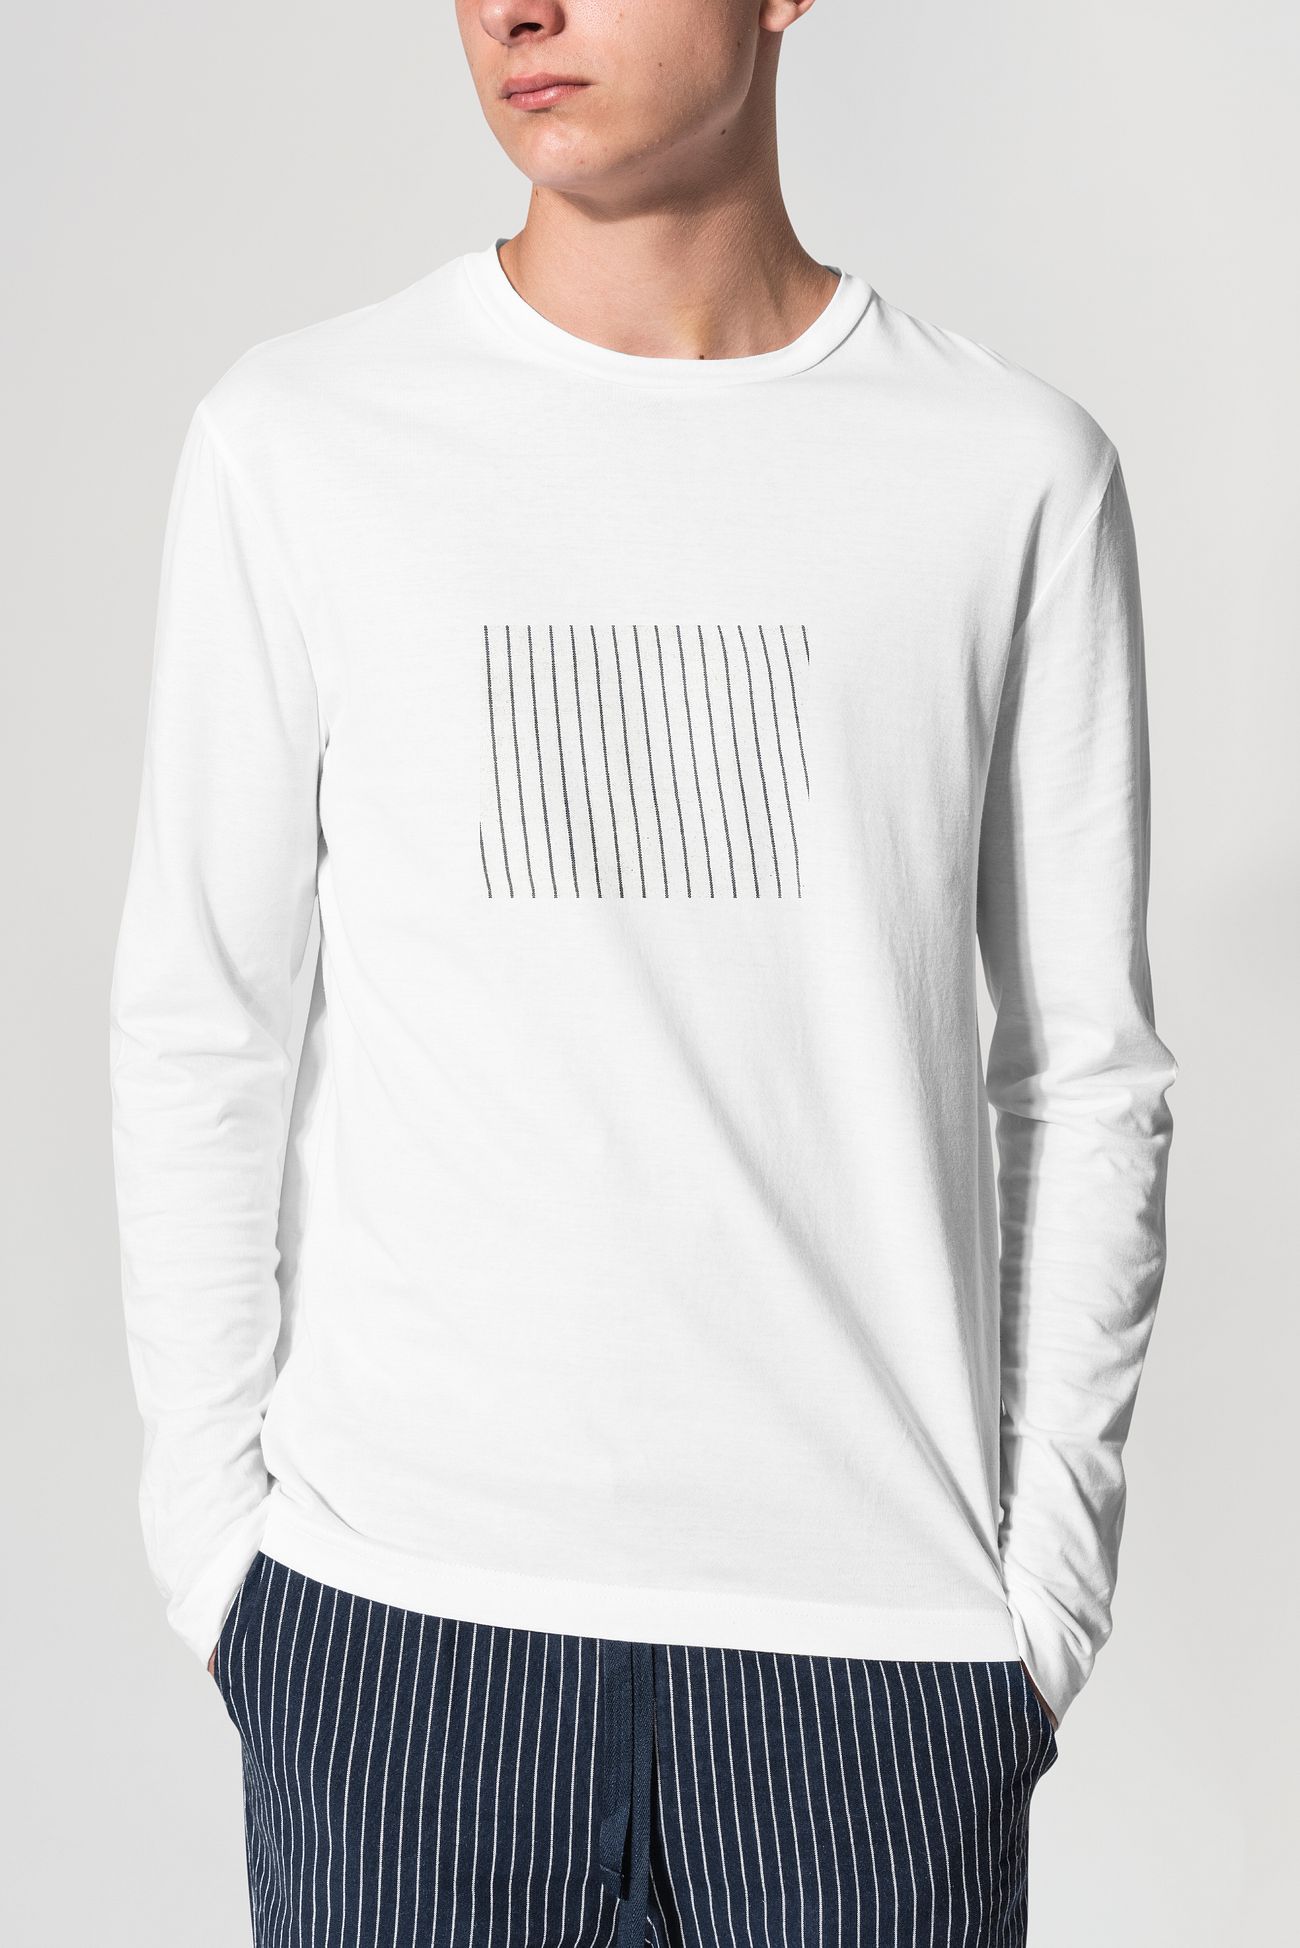 Basic white sweater psd mockup | Premium PSD Mockup - rawpixel